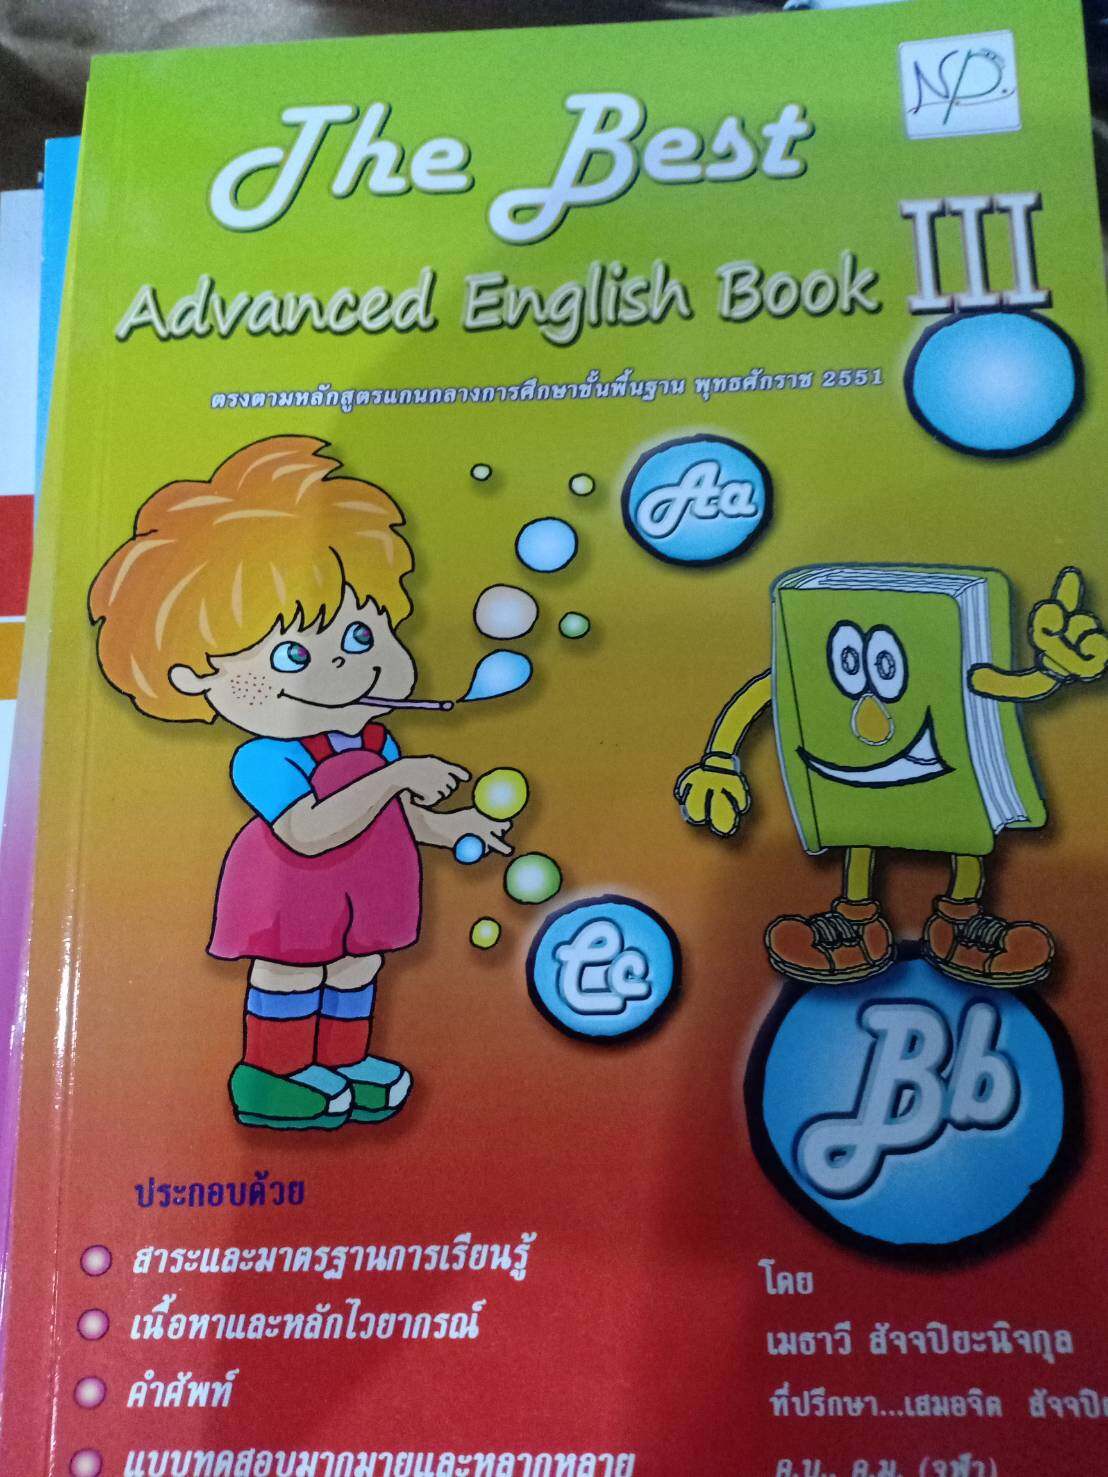 The Best Adcanced English Book III